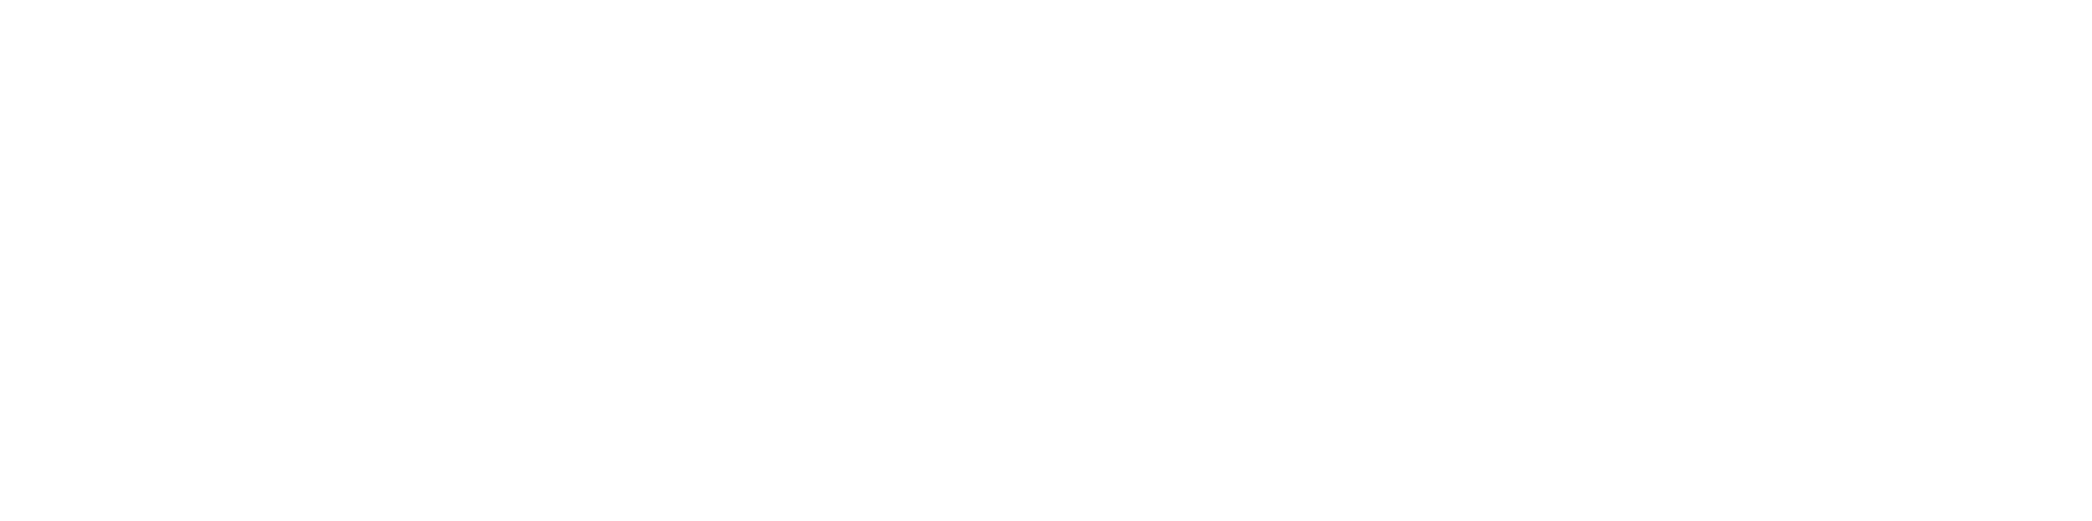 Chemwerth Logo